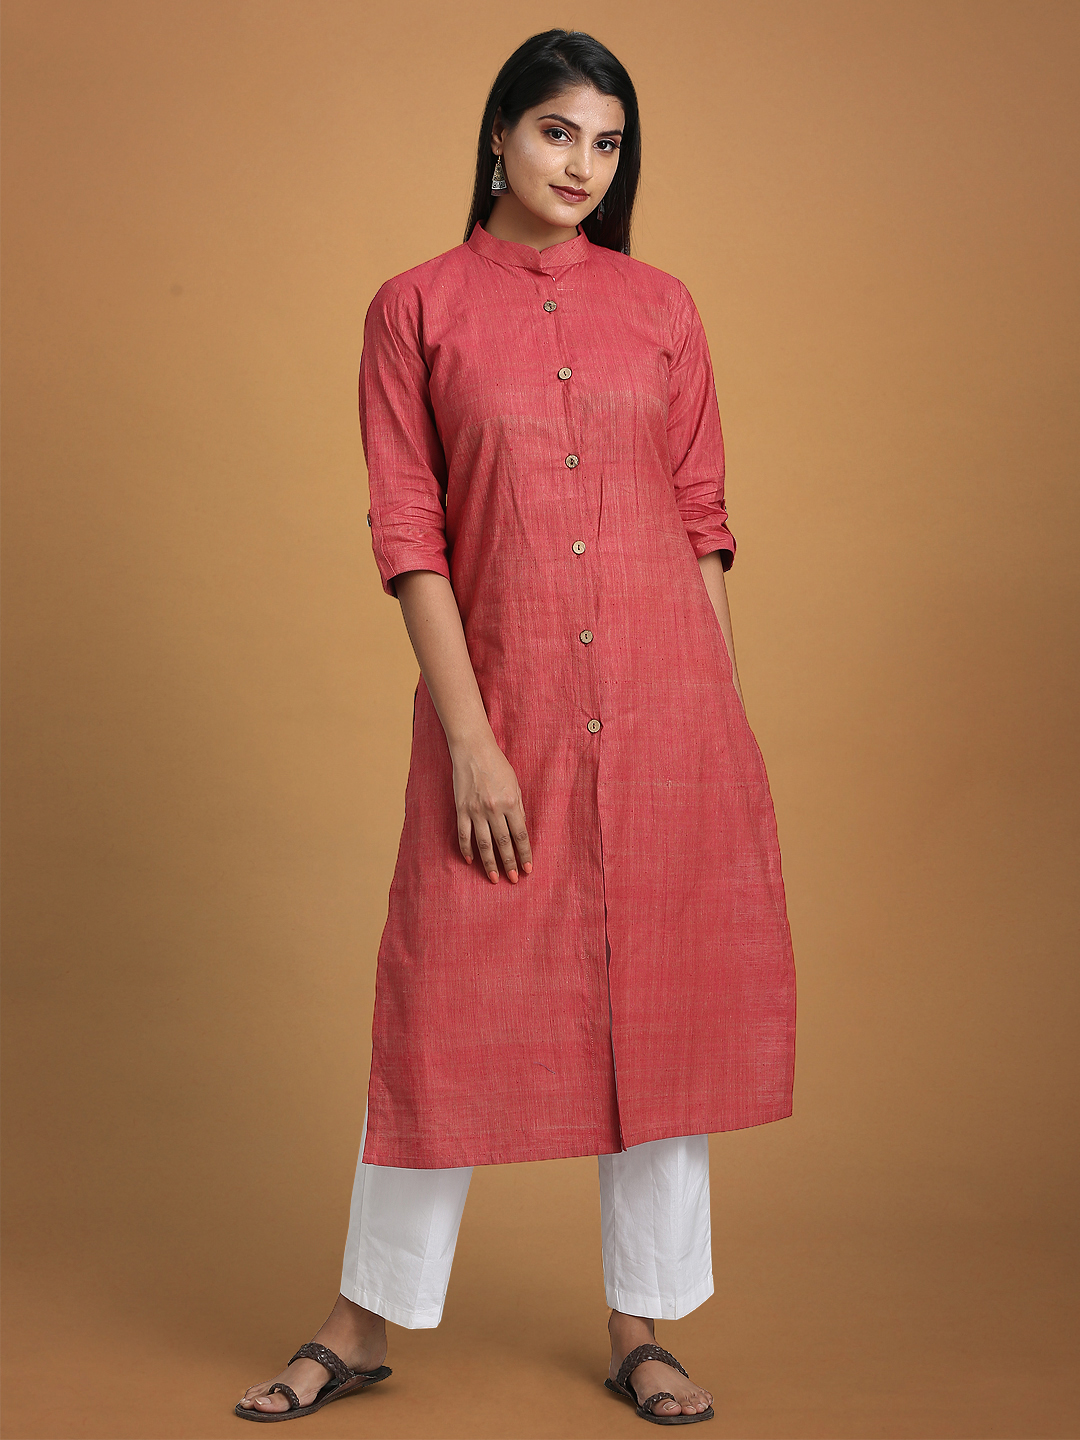 Formal Wear Ruchi Creation Khadi Cotton New Style Kurti at Rs 360 in Surat-vachngandaiphat.com.vn